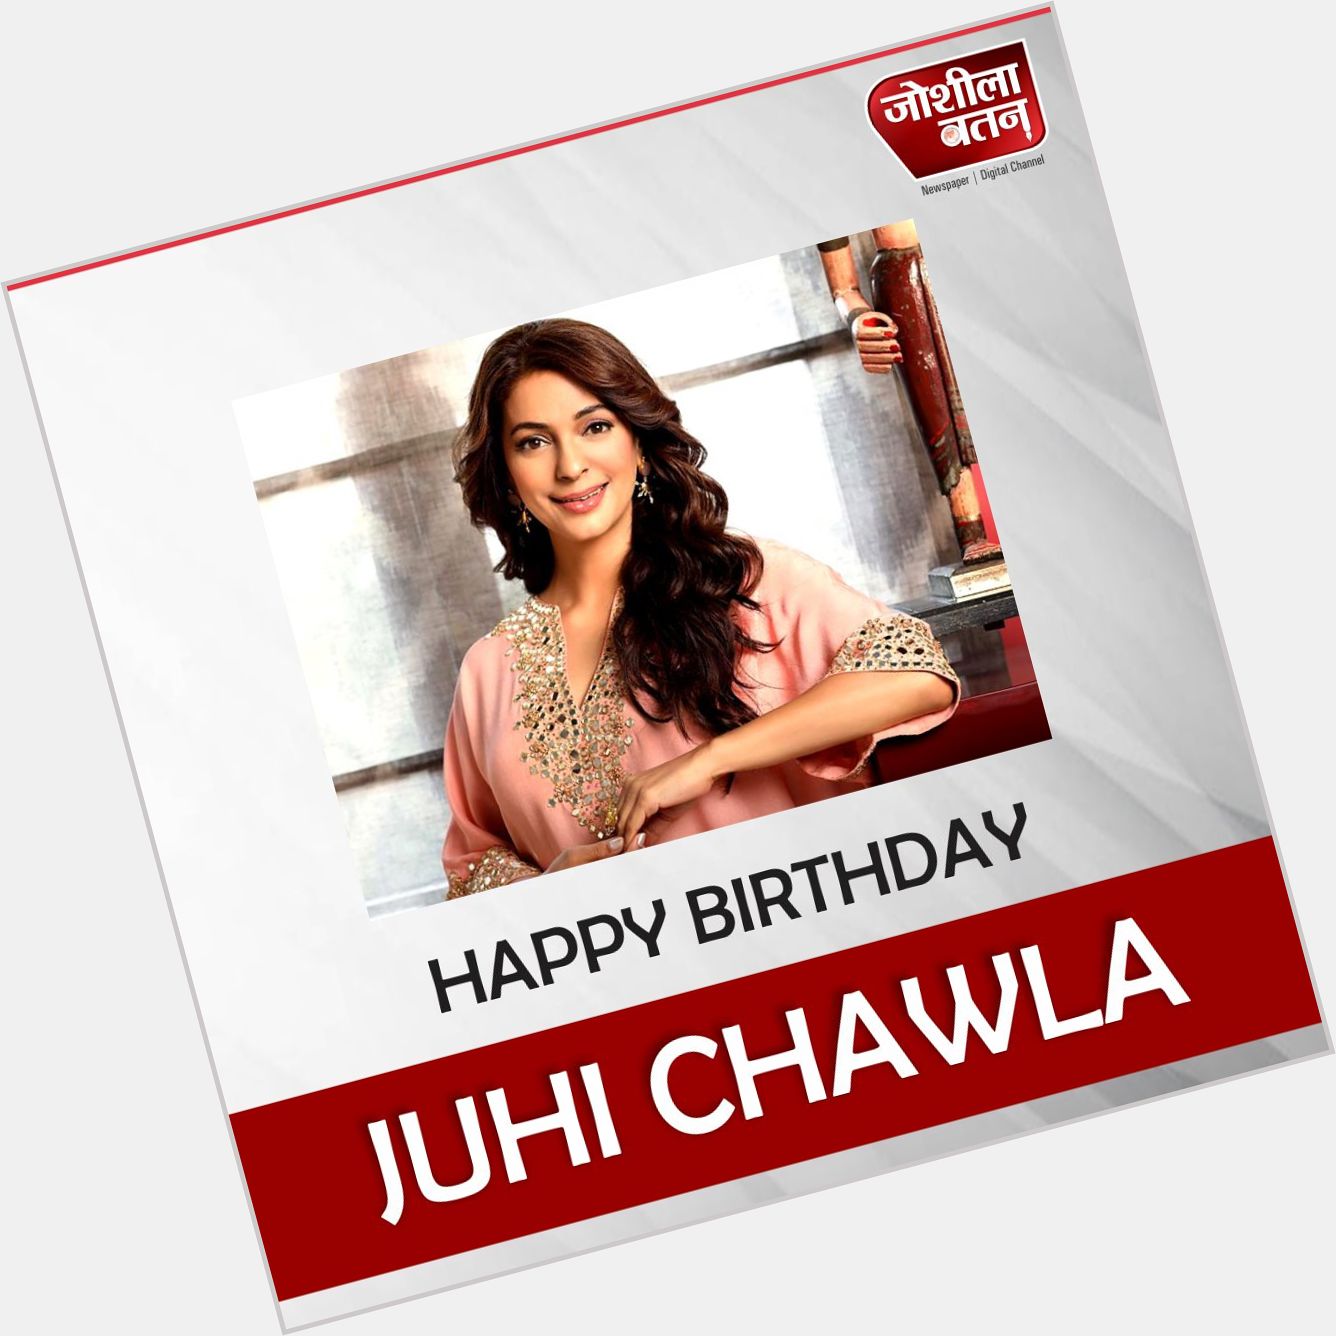 Happy birthday juhi chawla

.

. 